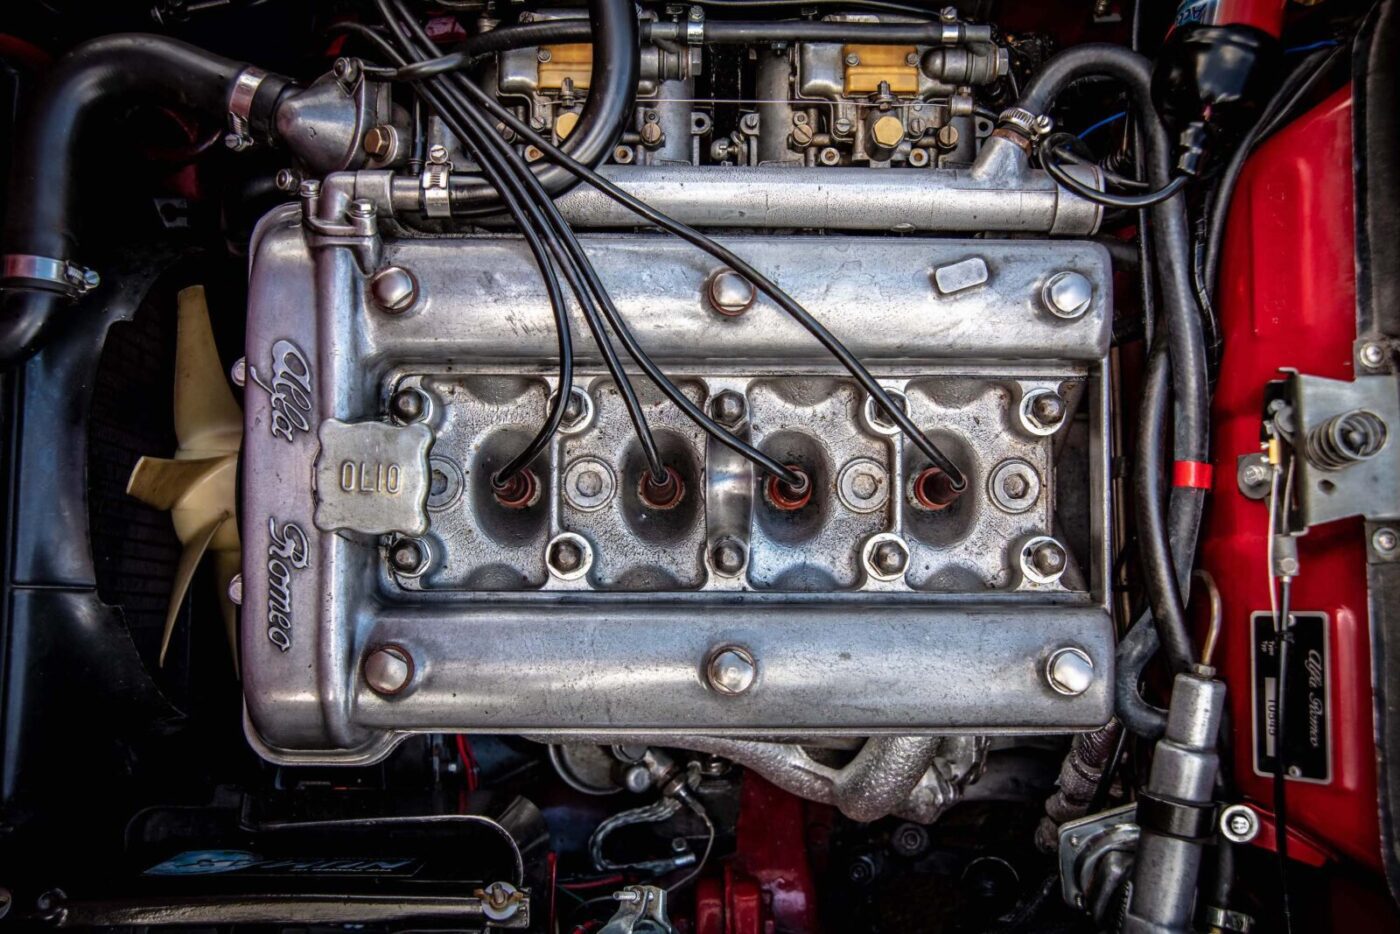 Alfa Romeo 1750 GTV engine